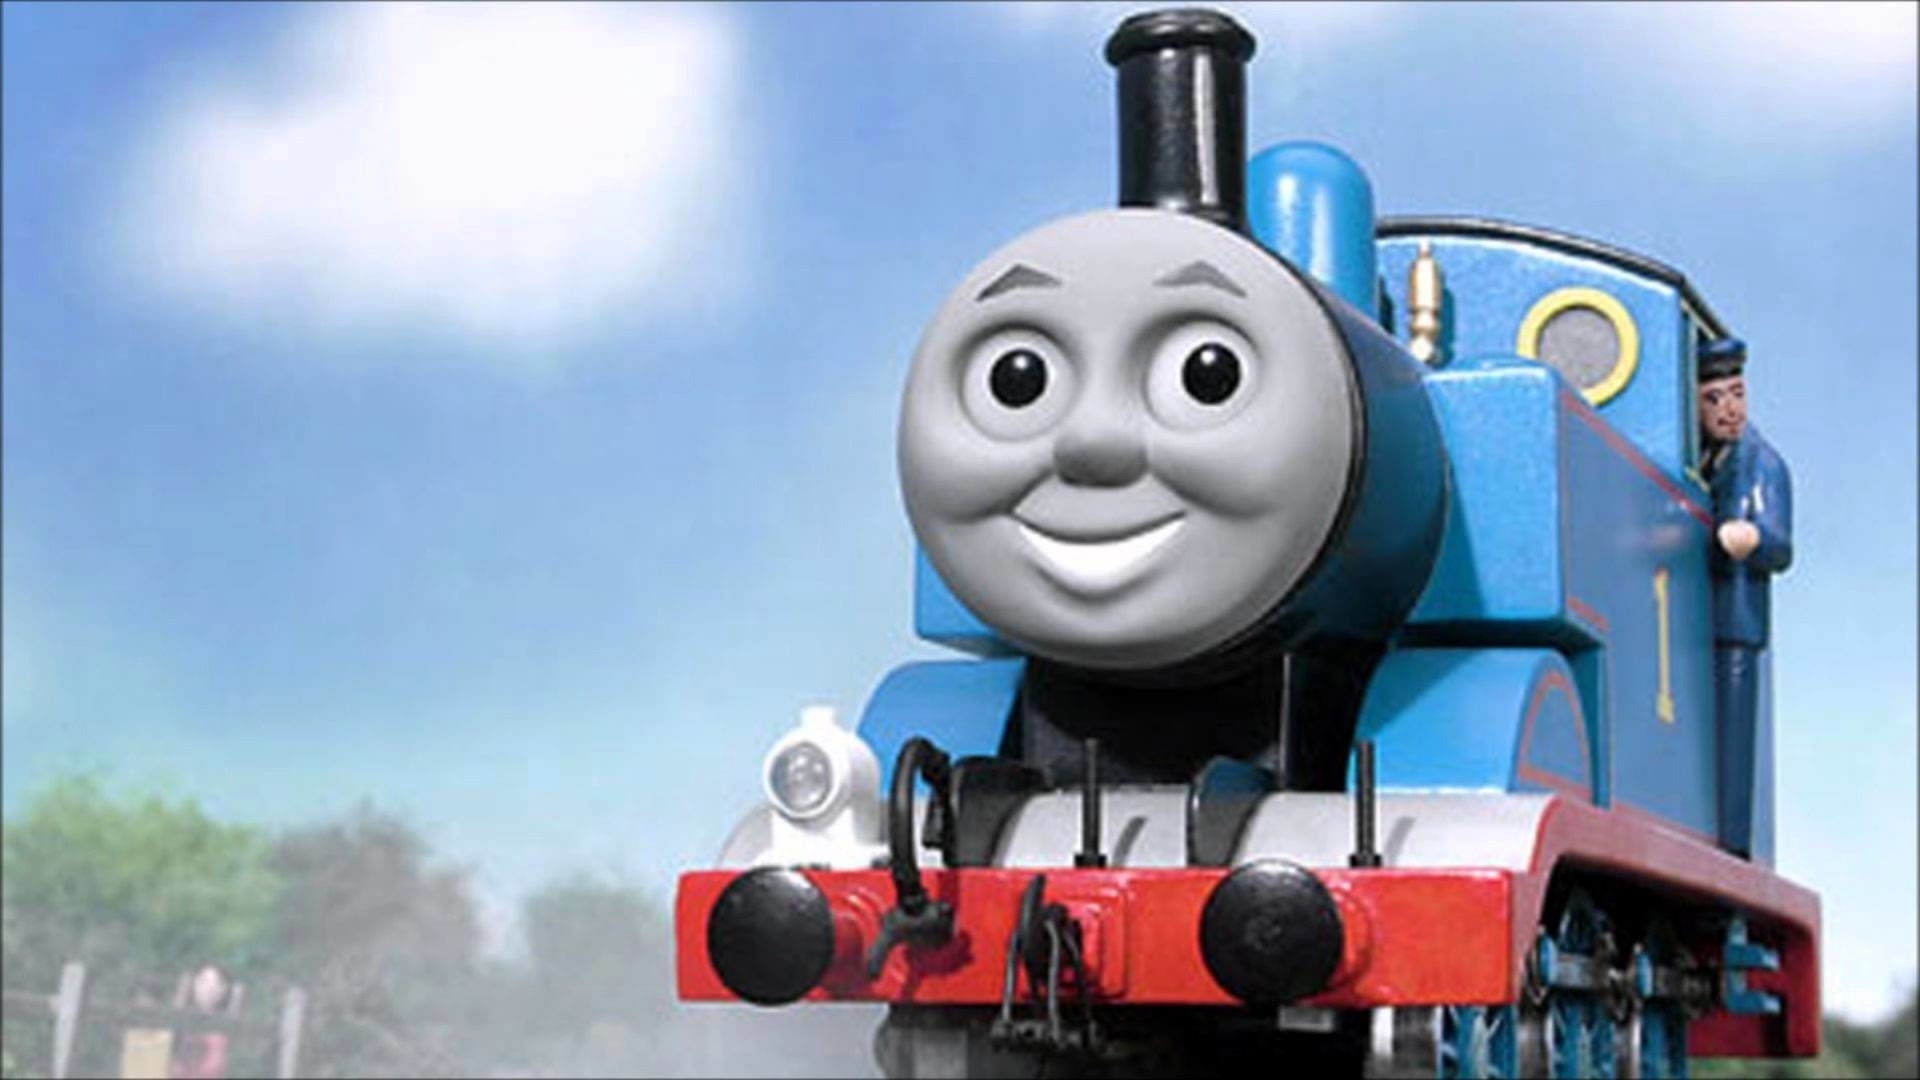 10 New Thomas The Train Wallpaper FULL HD 1080p For PC Desktop